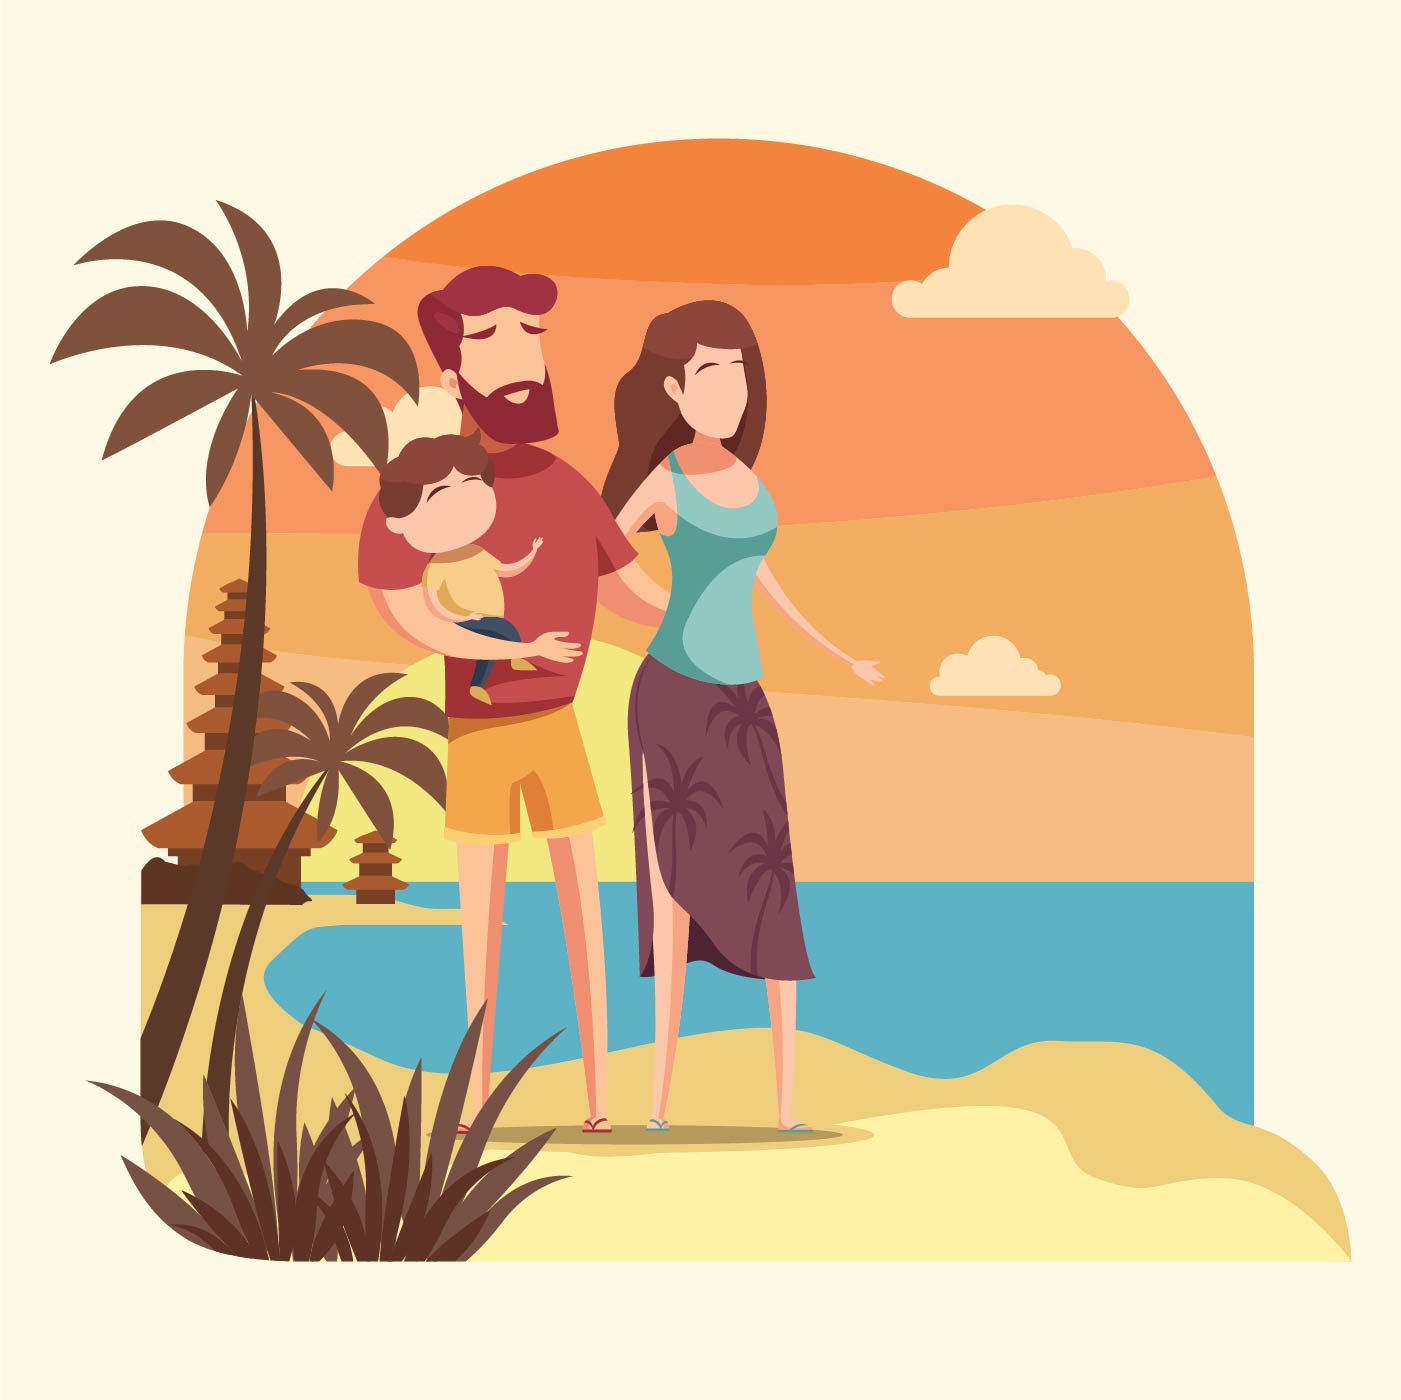 Download Family Vacation - Download Free Vectors, Clipart Graphics & Vector Art